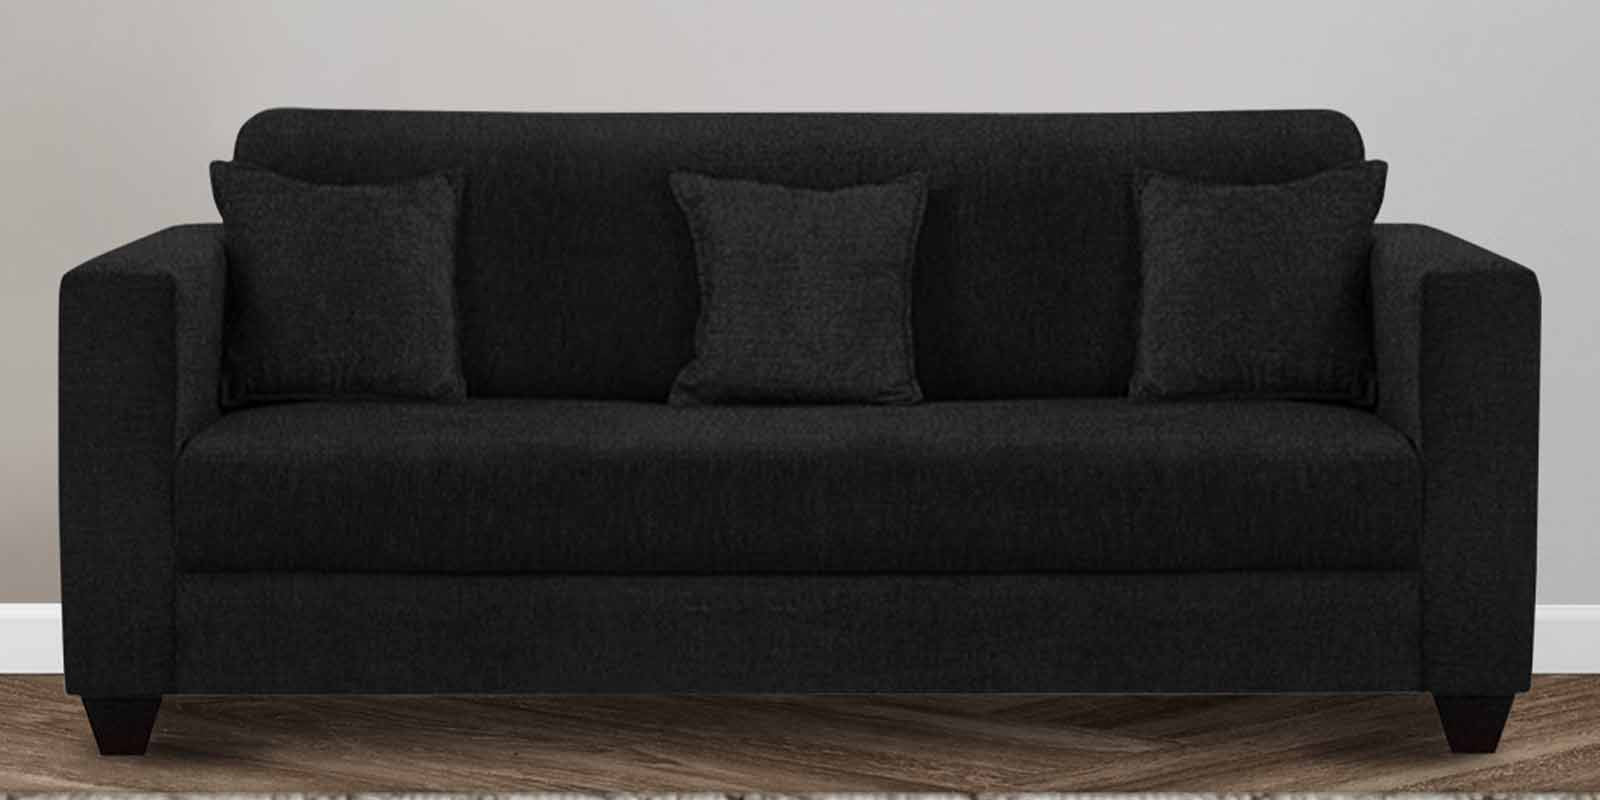 Nebula Fabric 3 Seater Sofa in Zed Black Colour